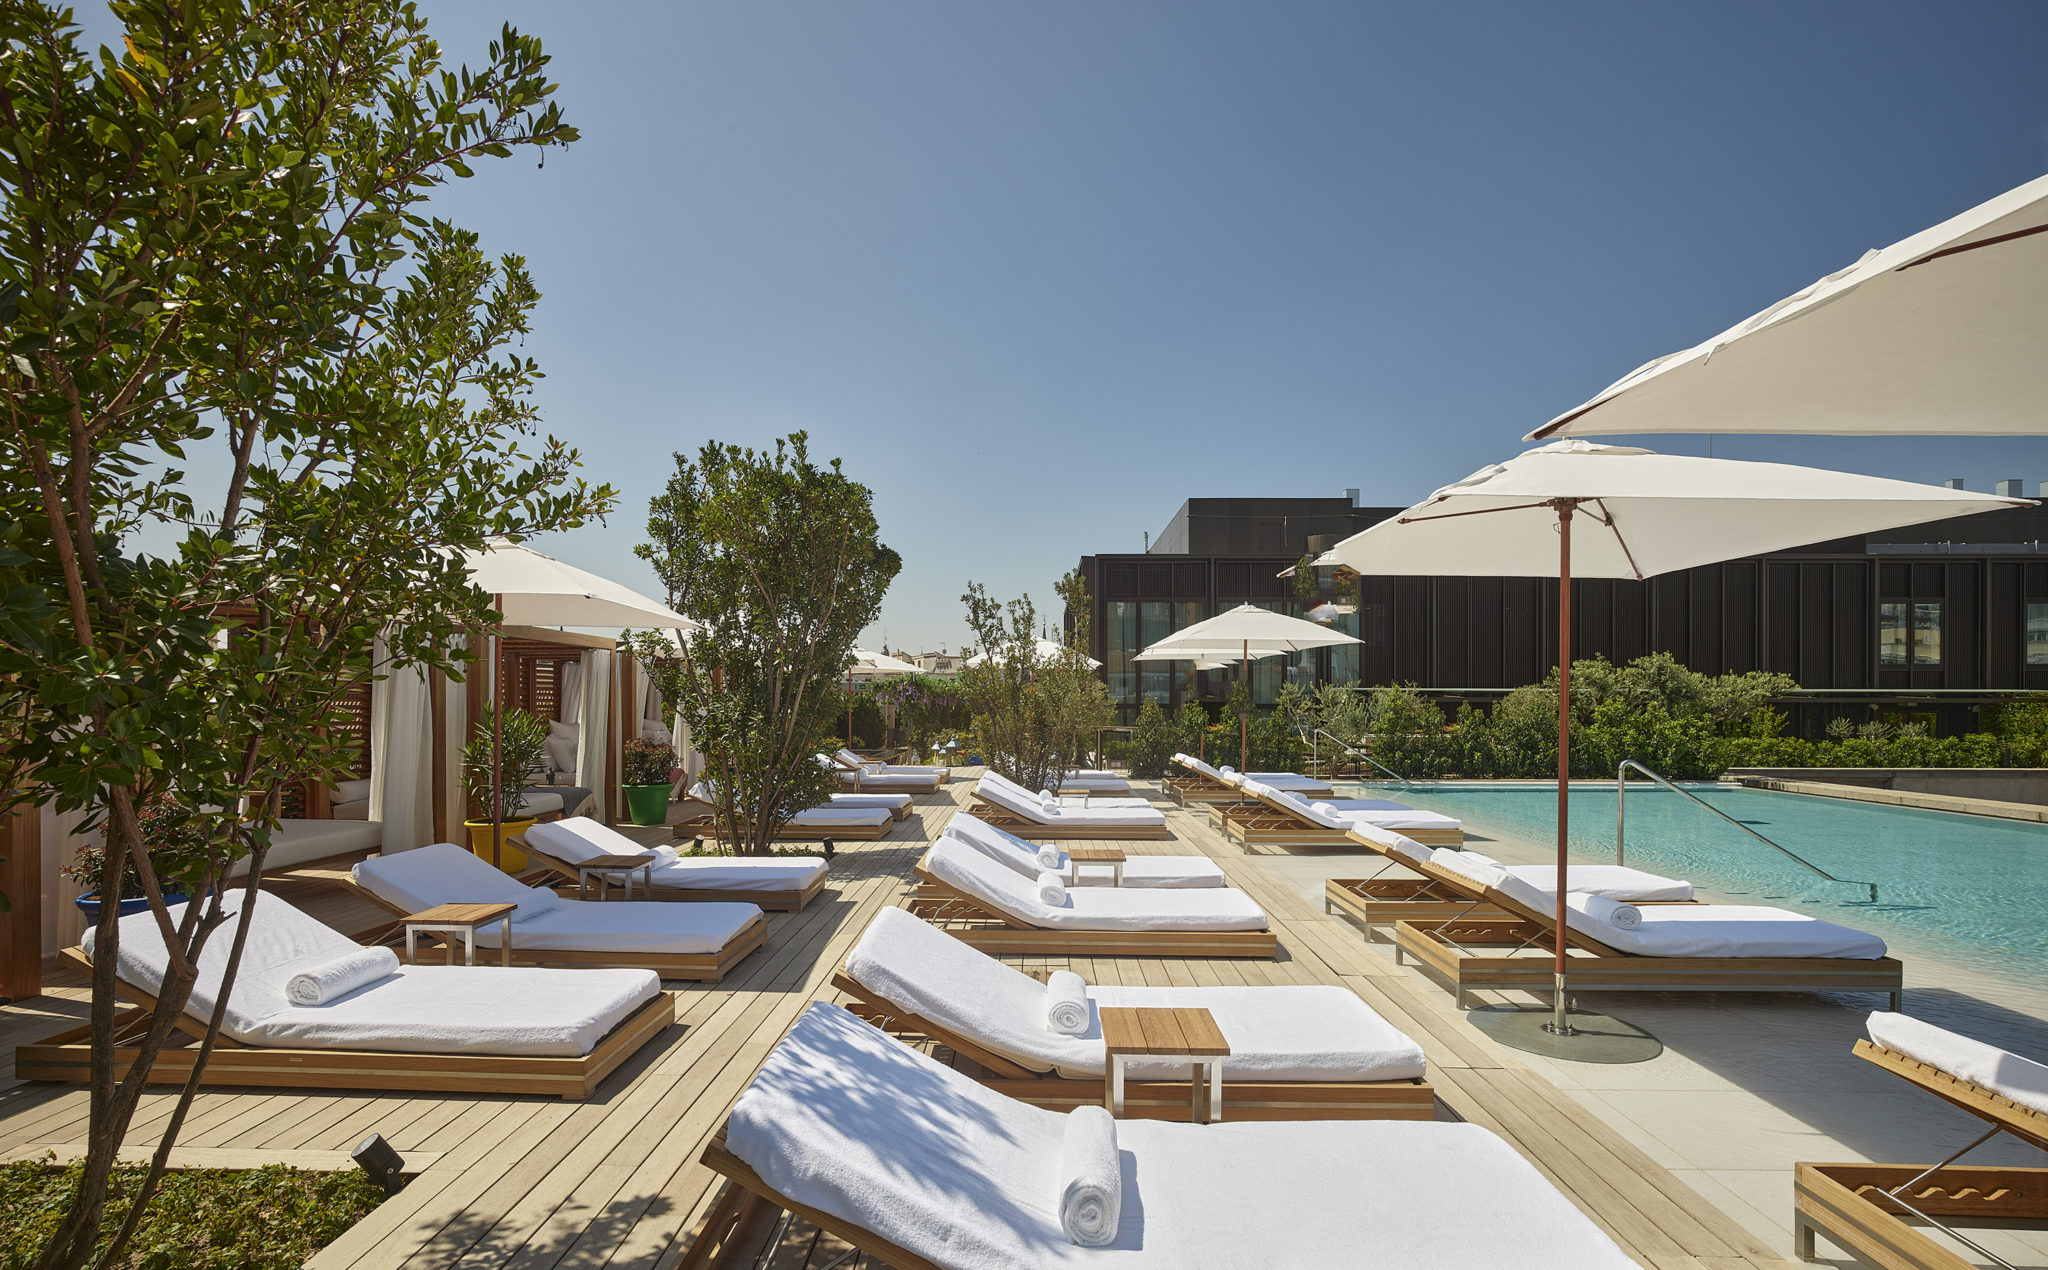 Rows of sun loungers alongside hotel pool